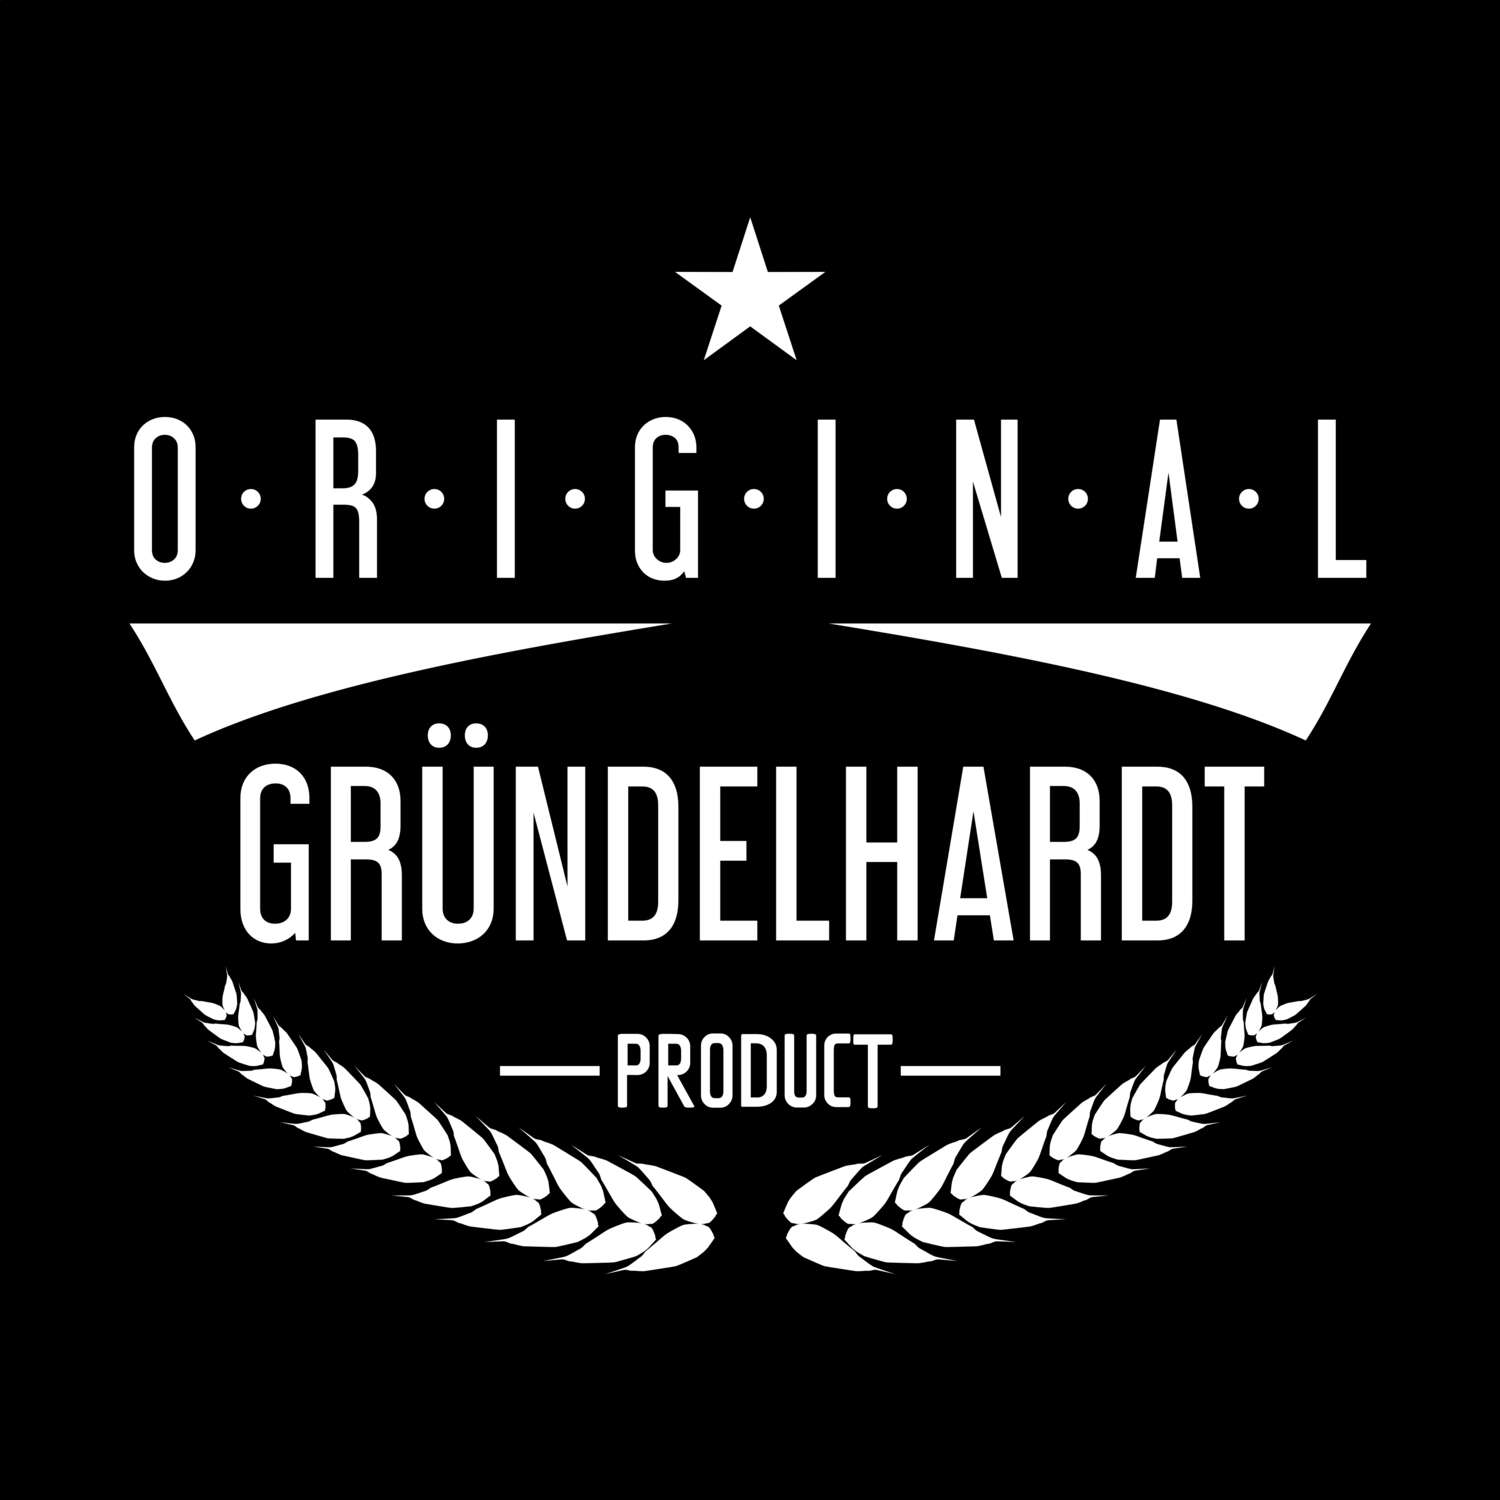 Gründelhardt T-Shirt »Original Product«